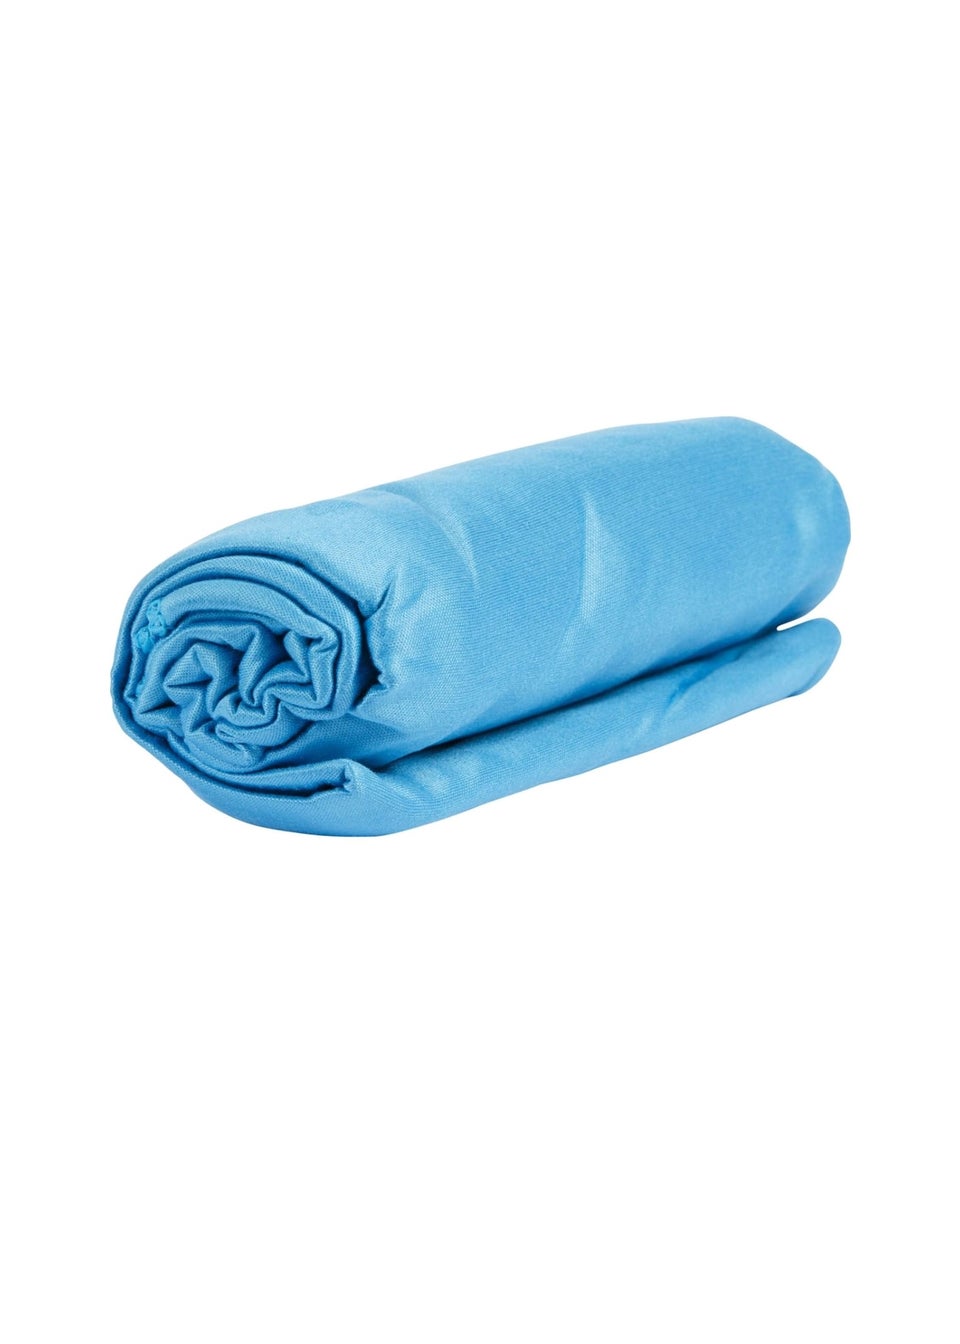 Trespass Blue Compatto Dryfast Towel